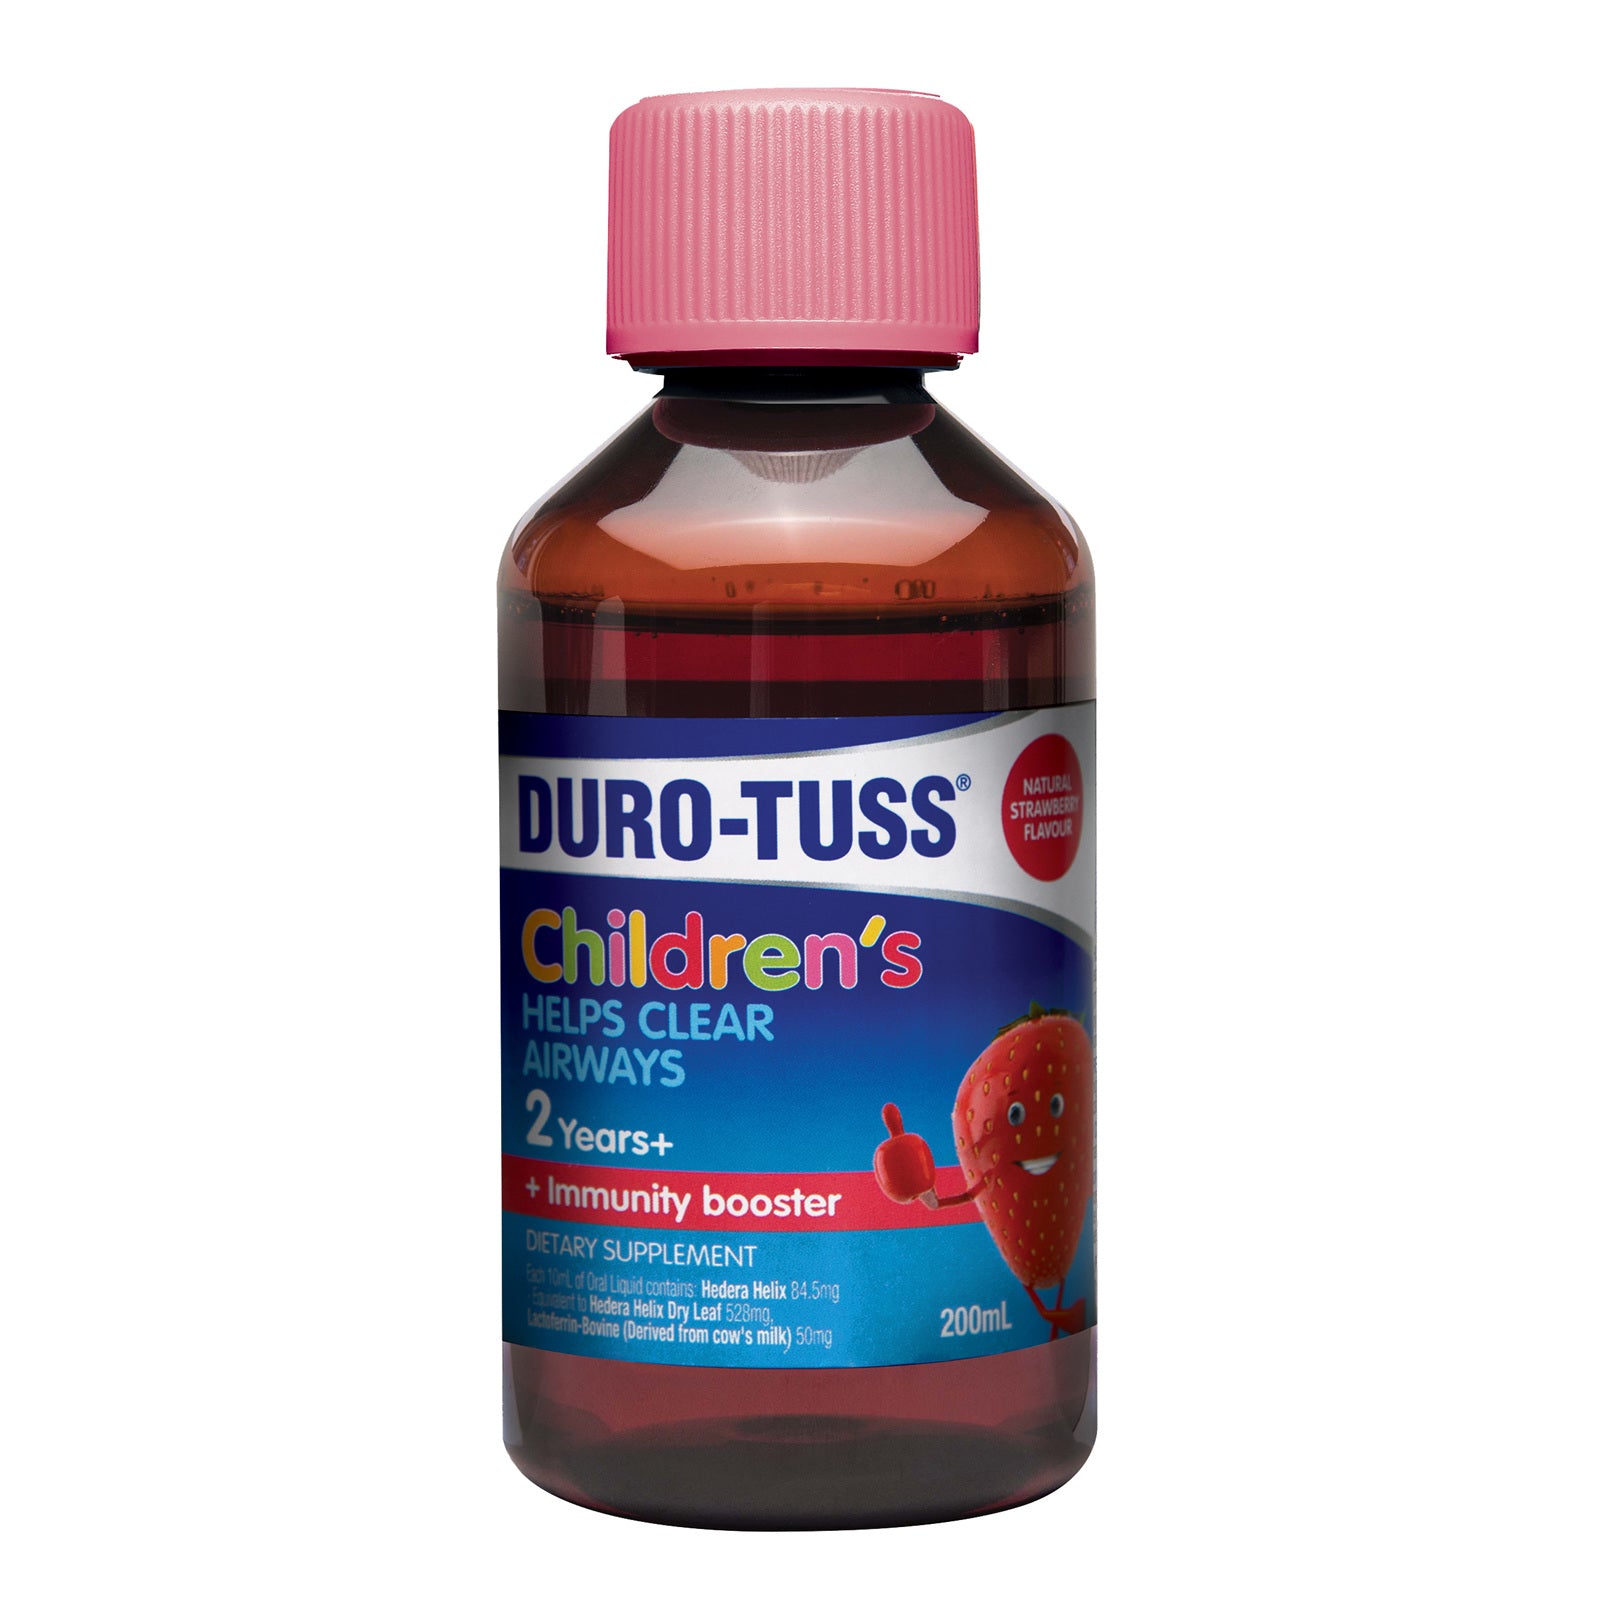 Duro-Tuss Children's Ivy Leaf Extract Strawberry - 200ml